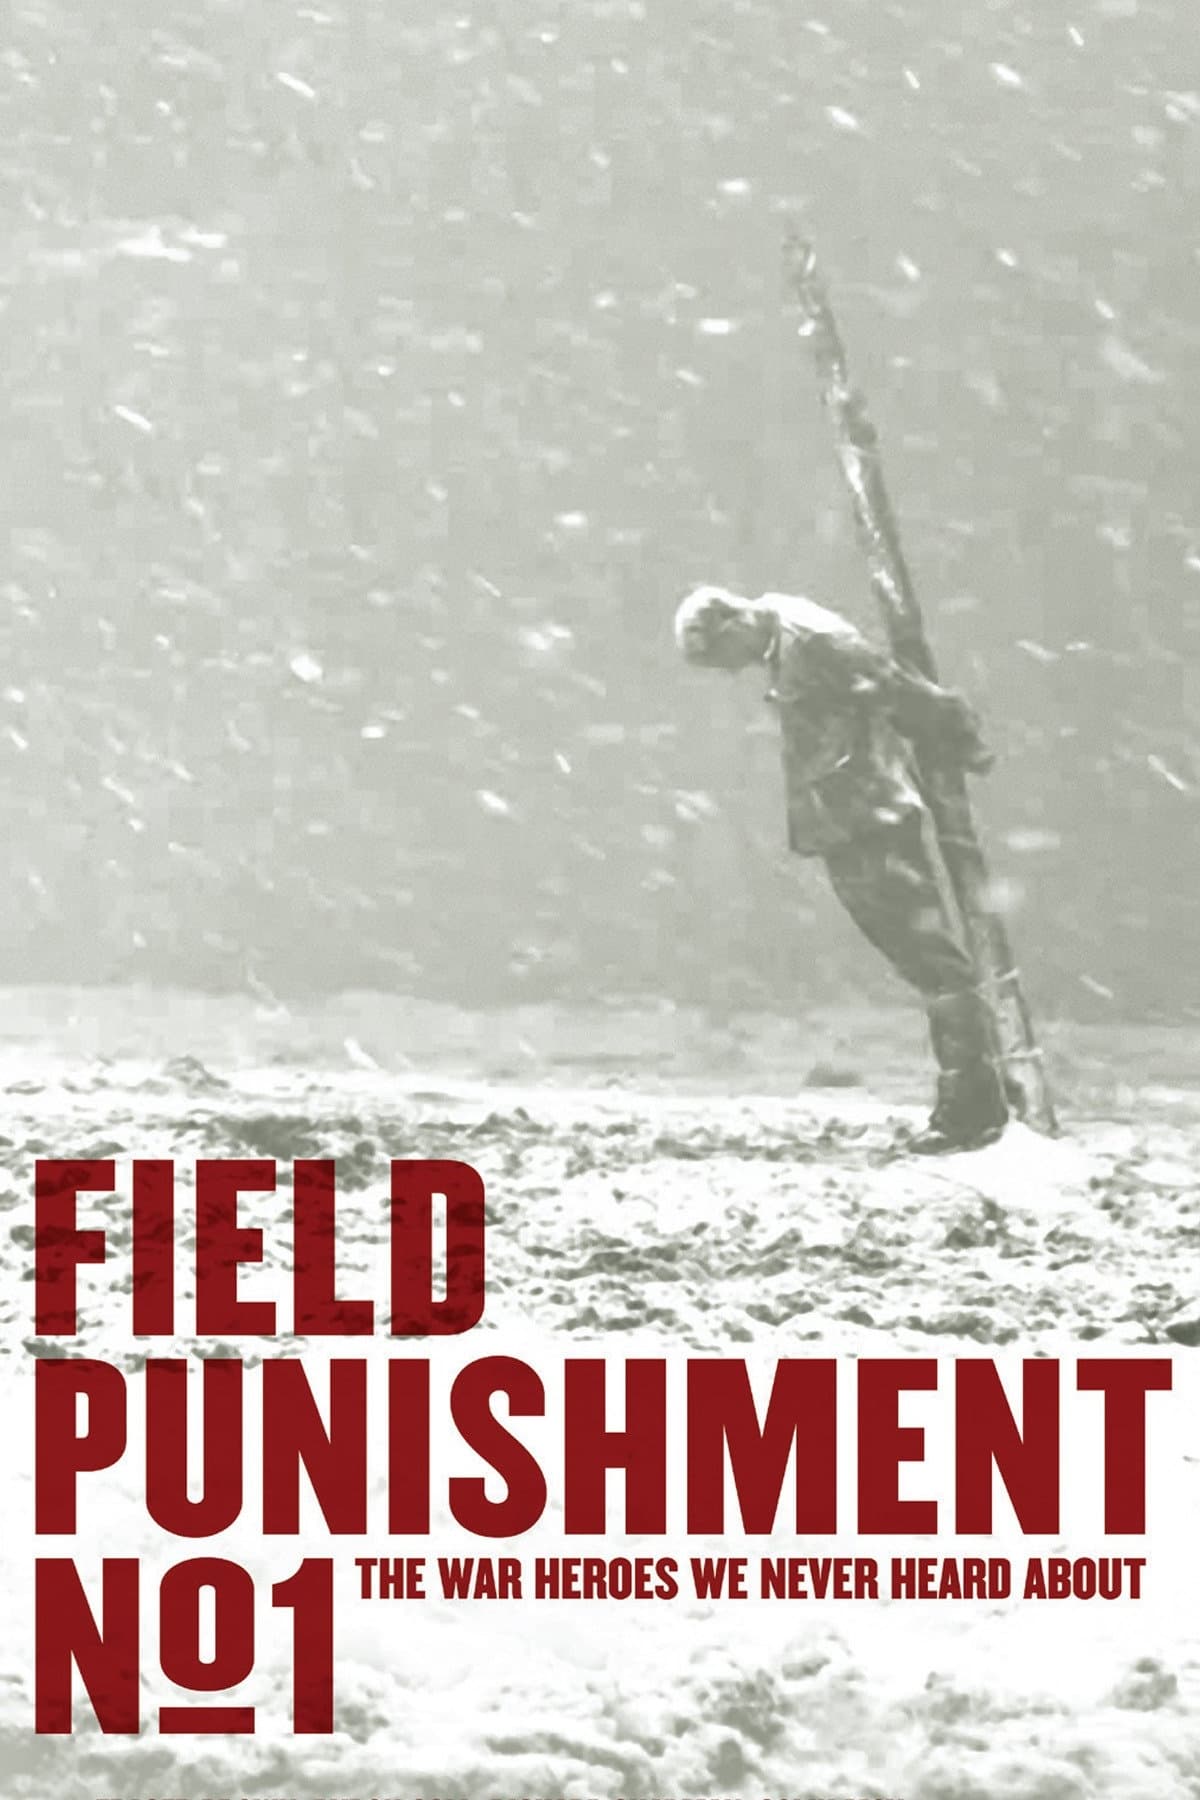 Field Punishment No.1 (2014)